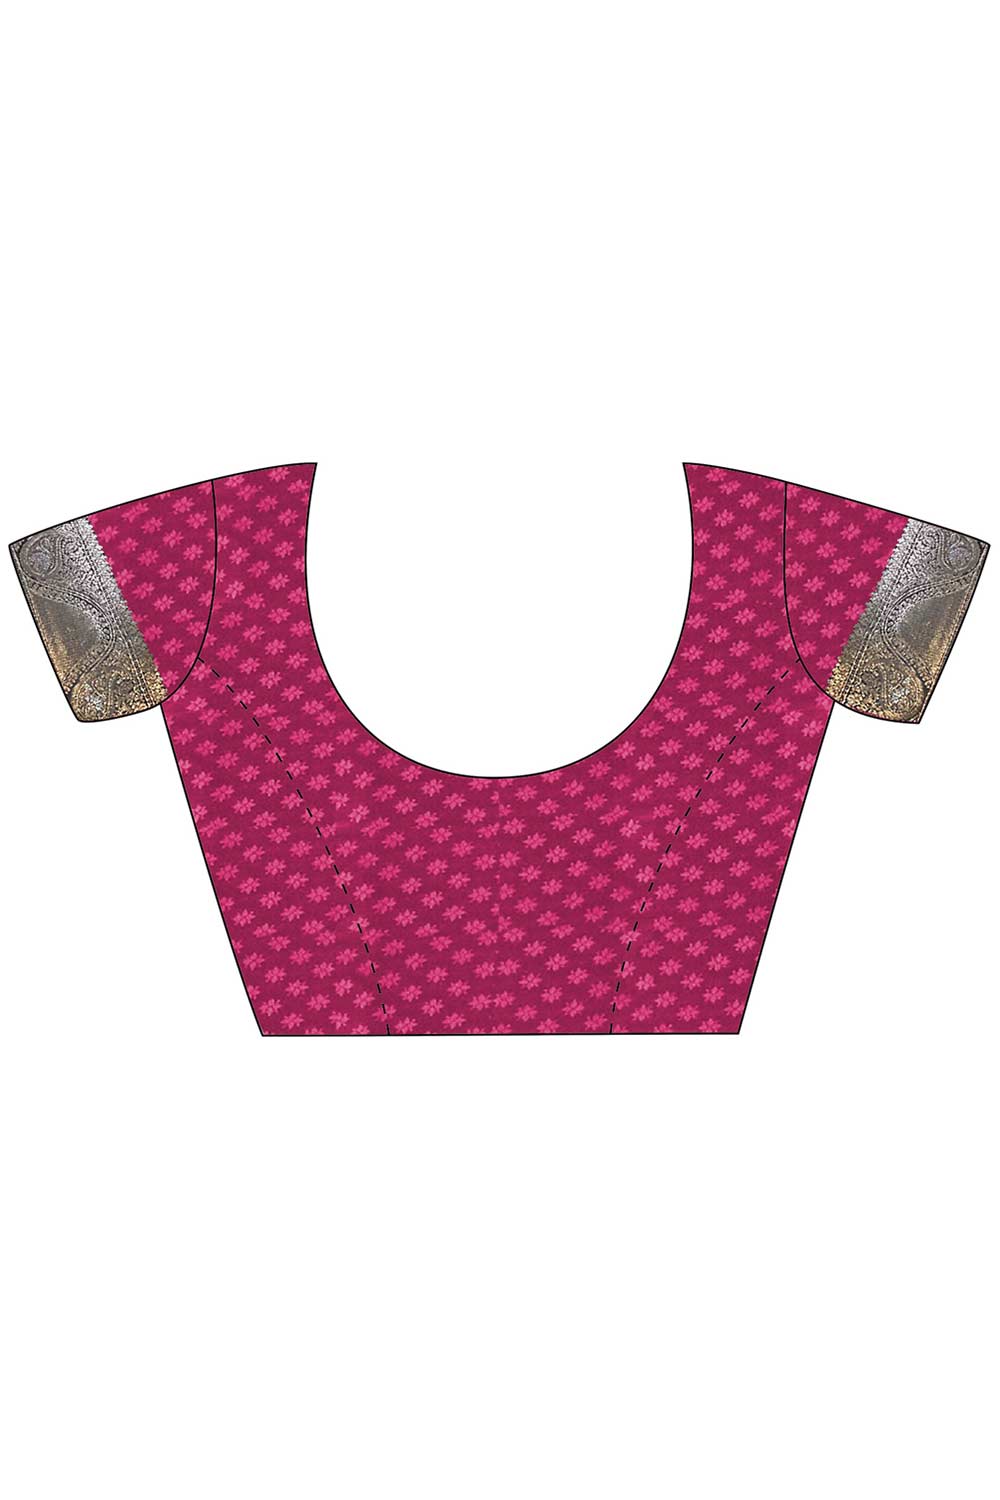 Buy Pink Art Silk Bagh Design One Minute Saree Online - Zoom In